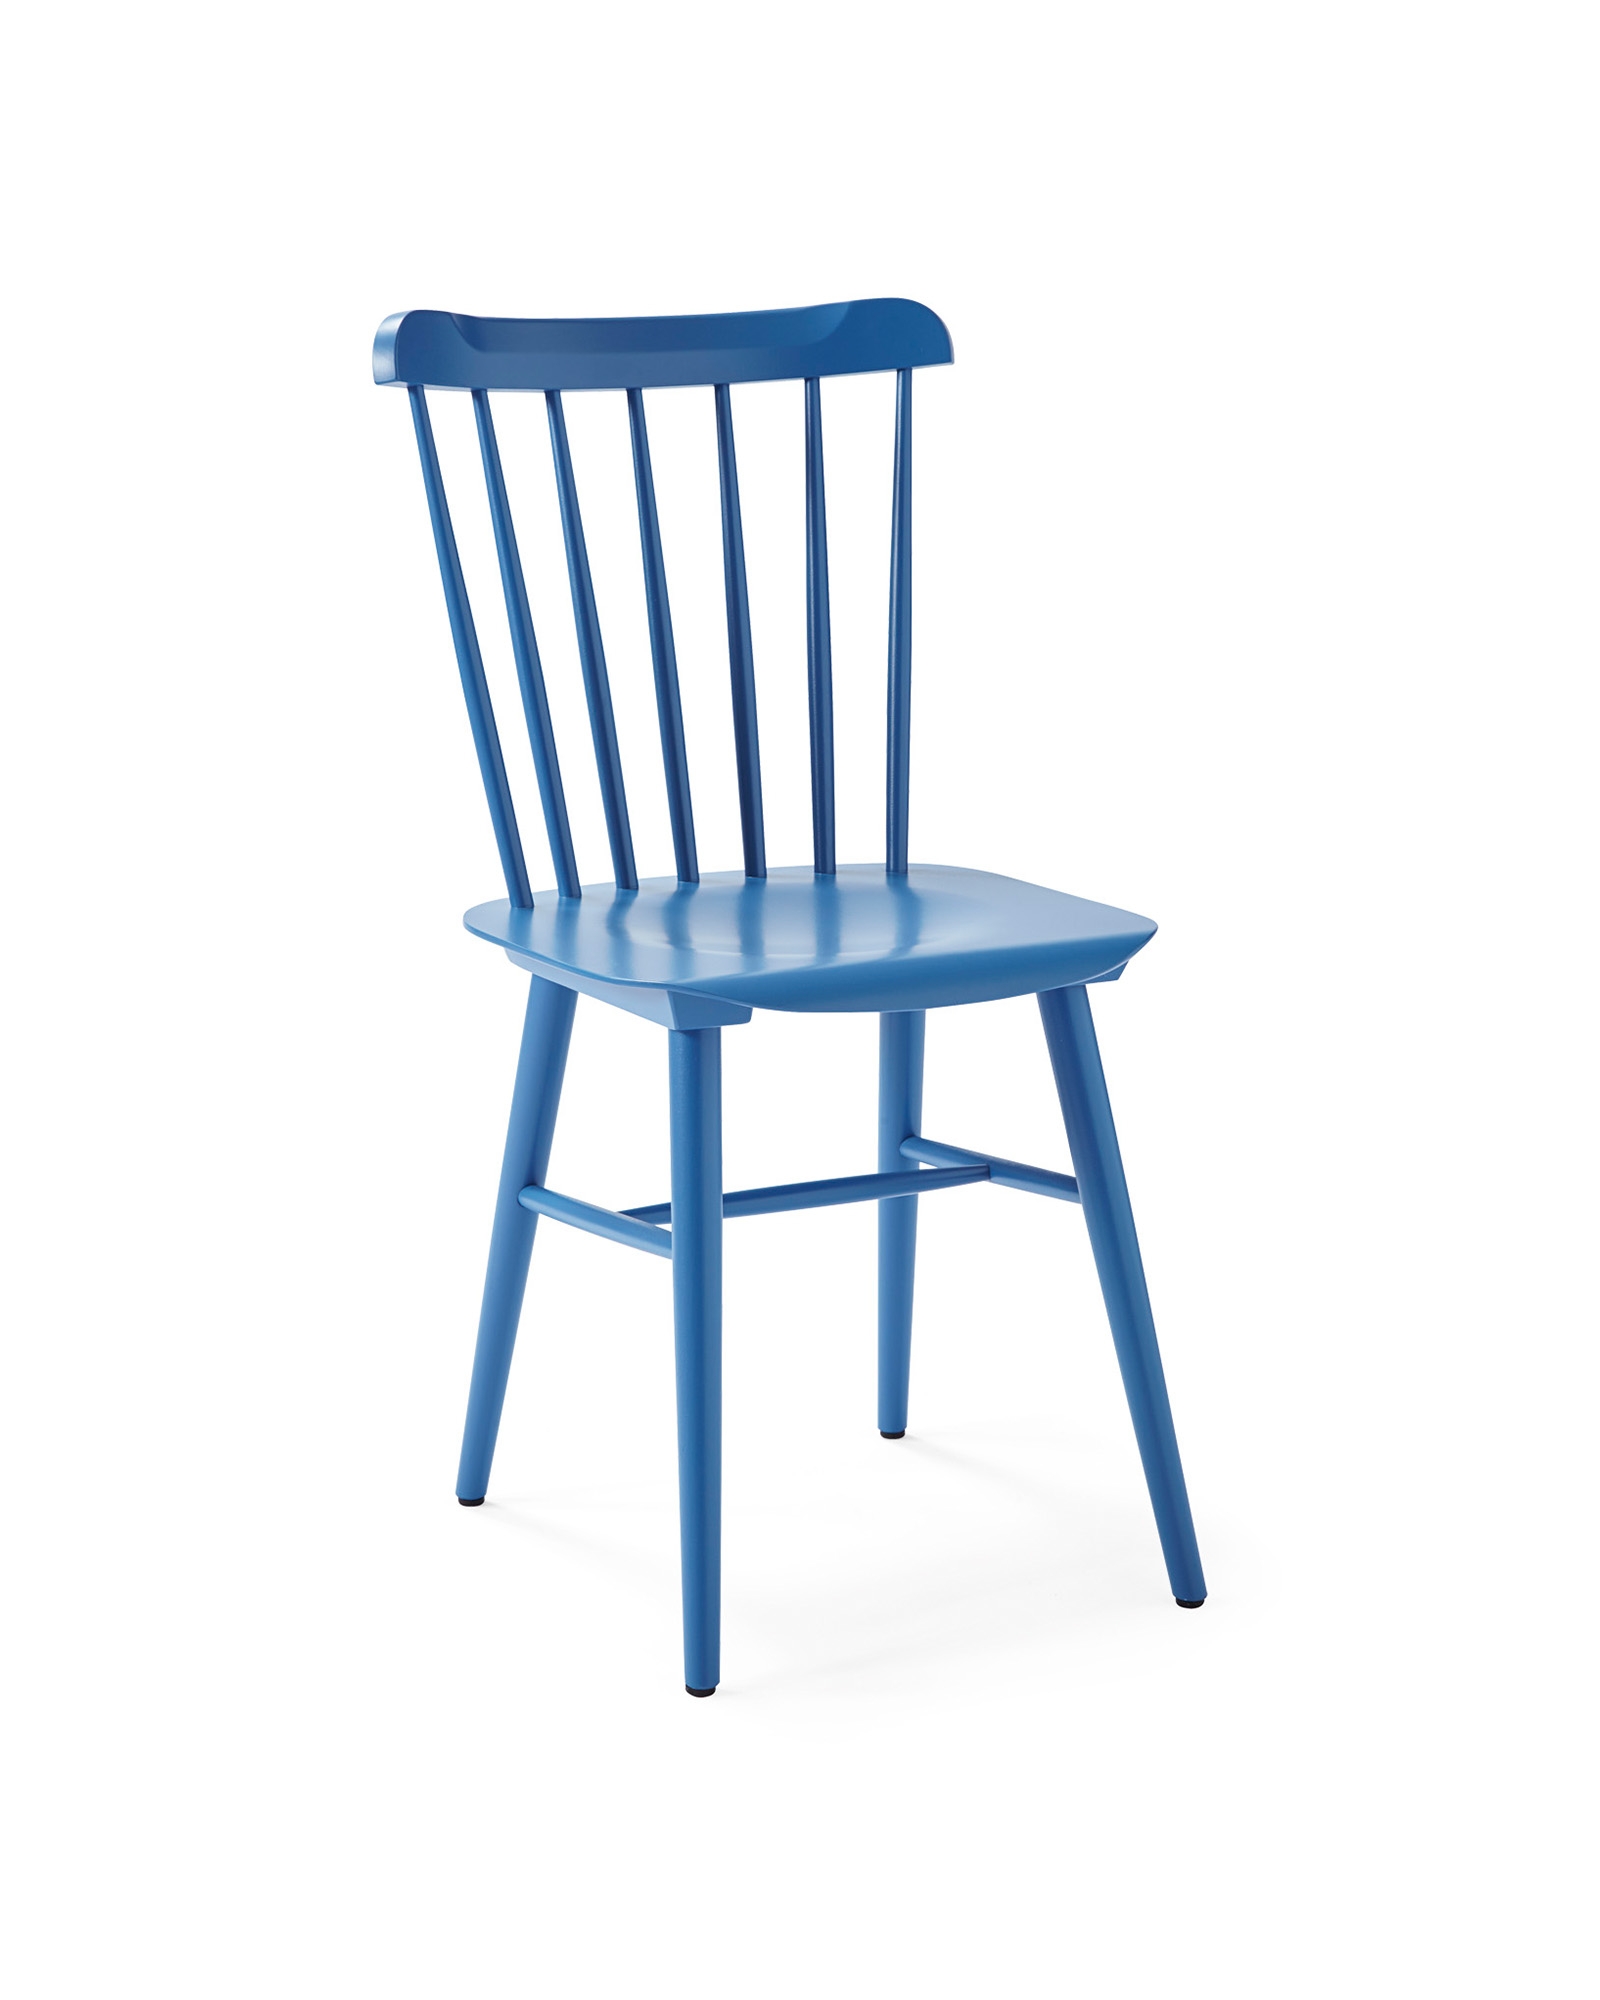 Tucker Chair - Harbor - Image 0